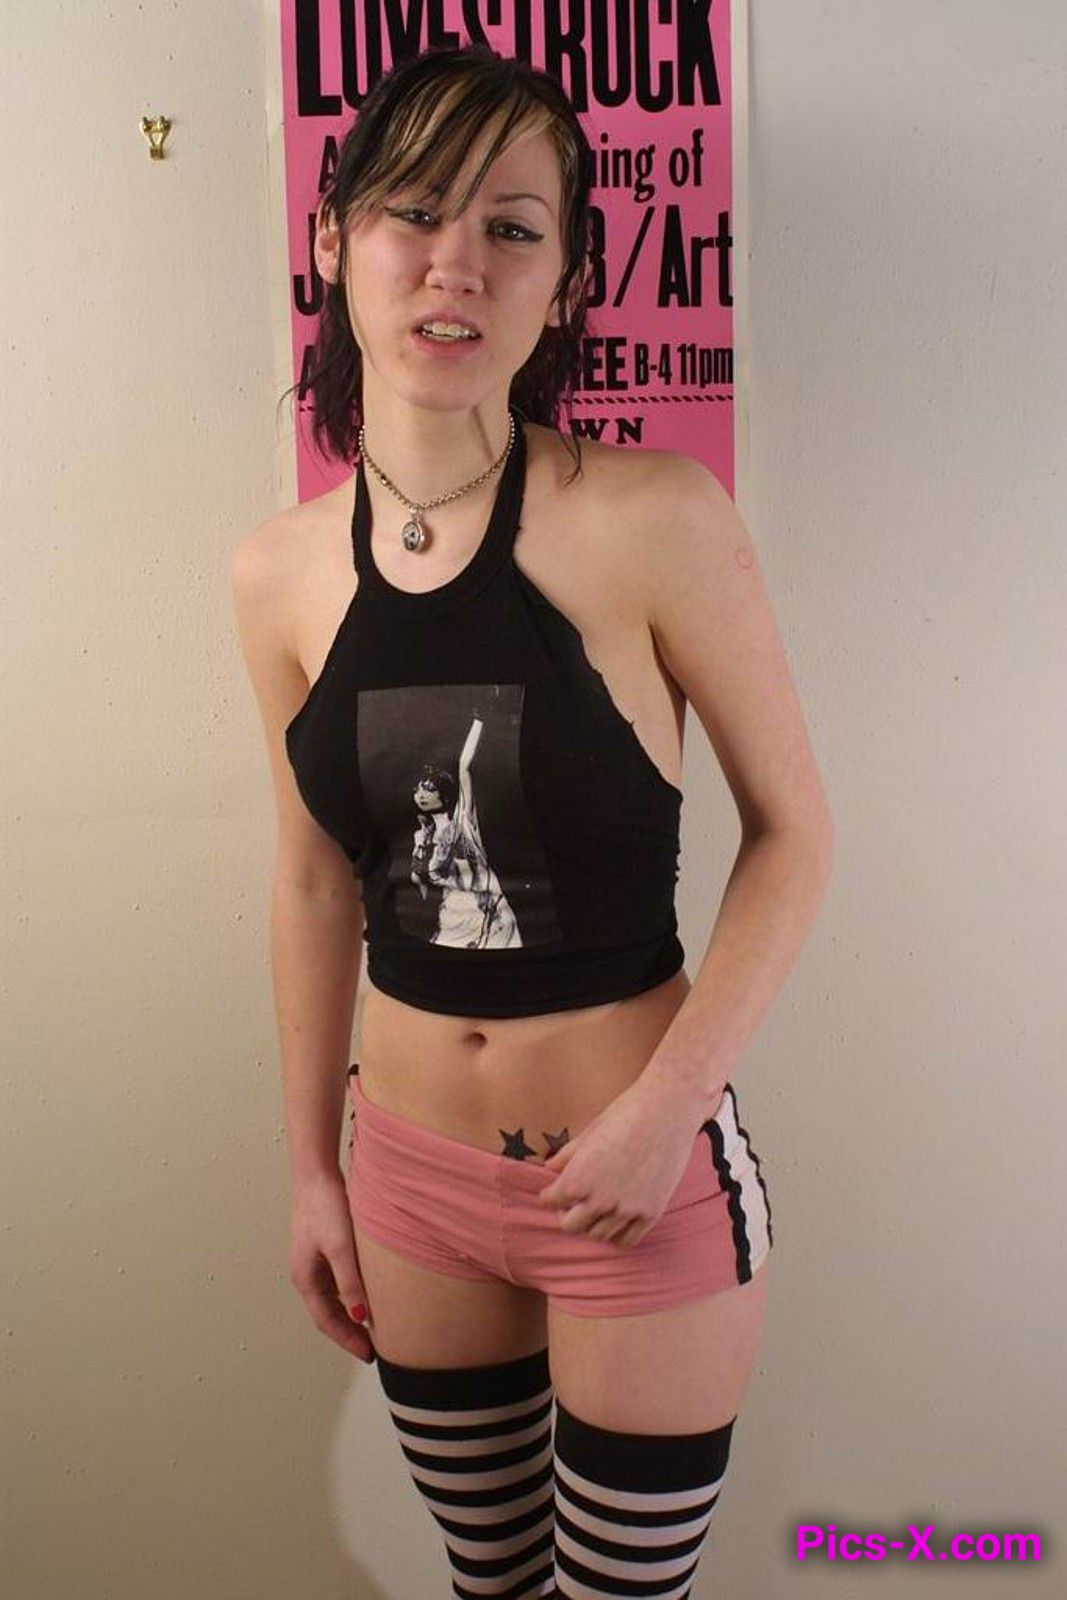 Barely legal gothic teen hottie posing in her bedroom - Punk Rock Girlfriend - Image 1